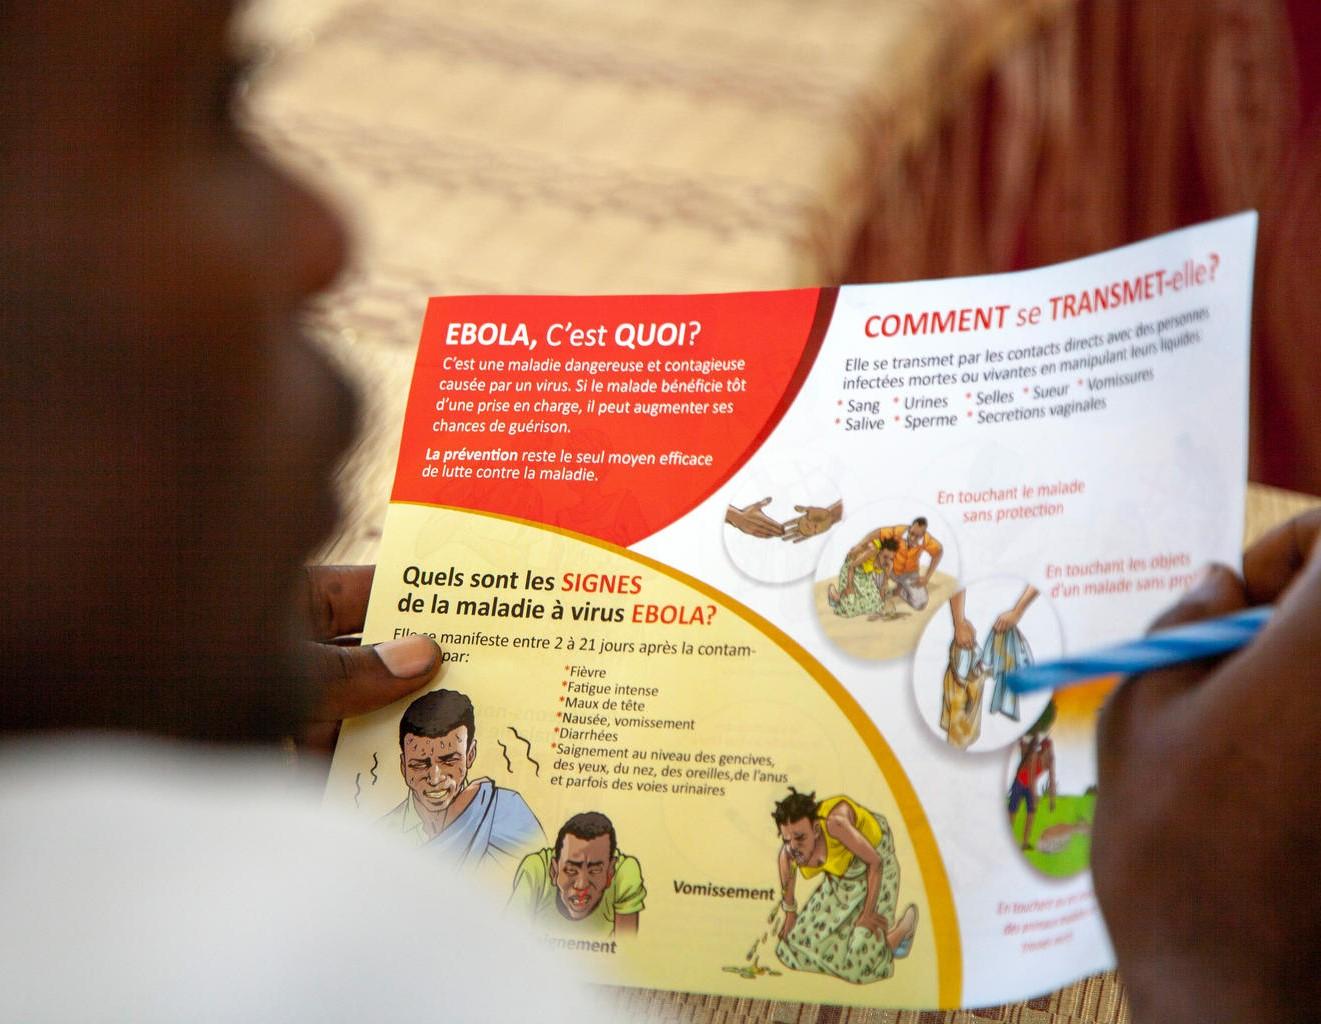 Ebola prevention pamphlet